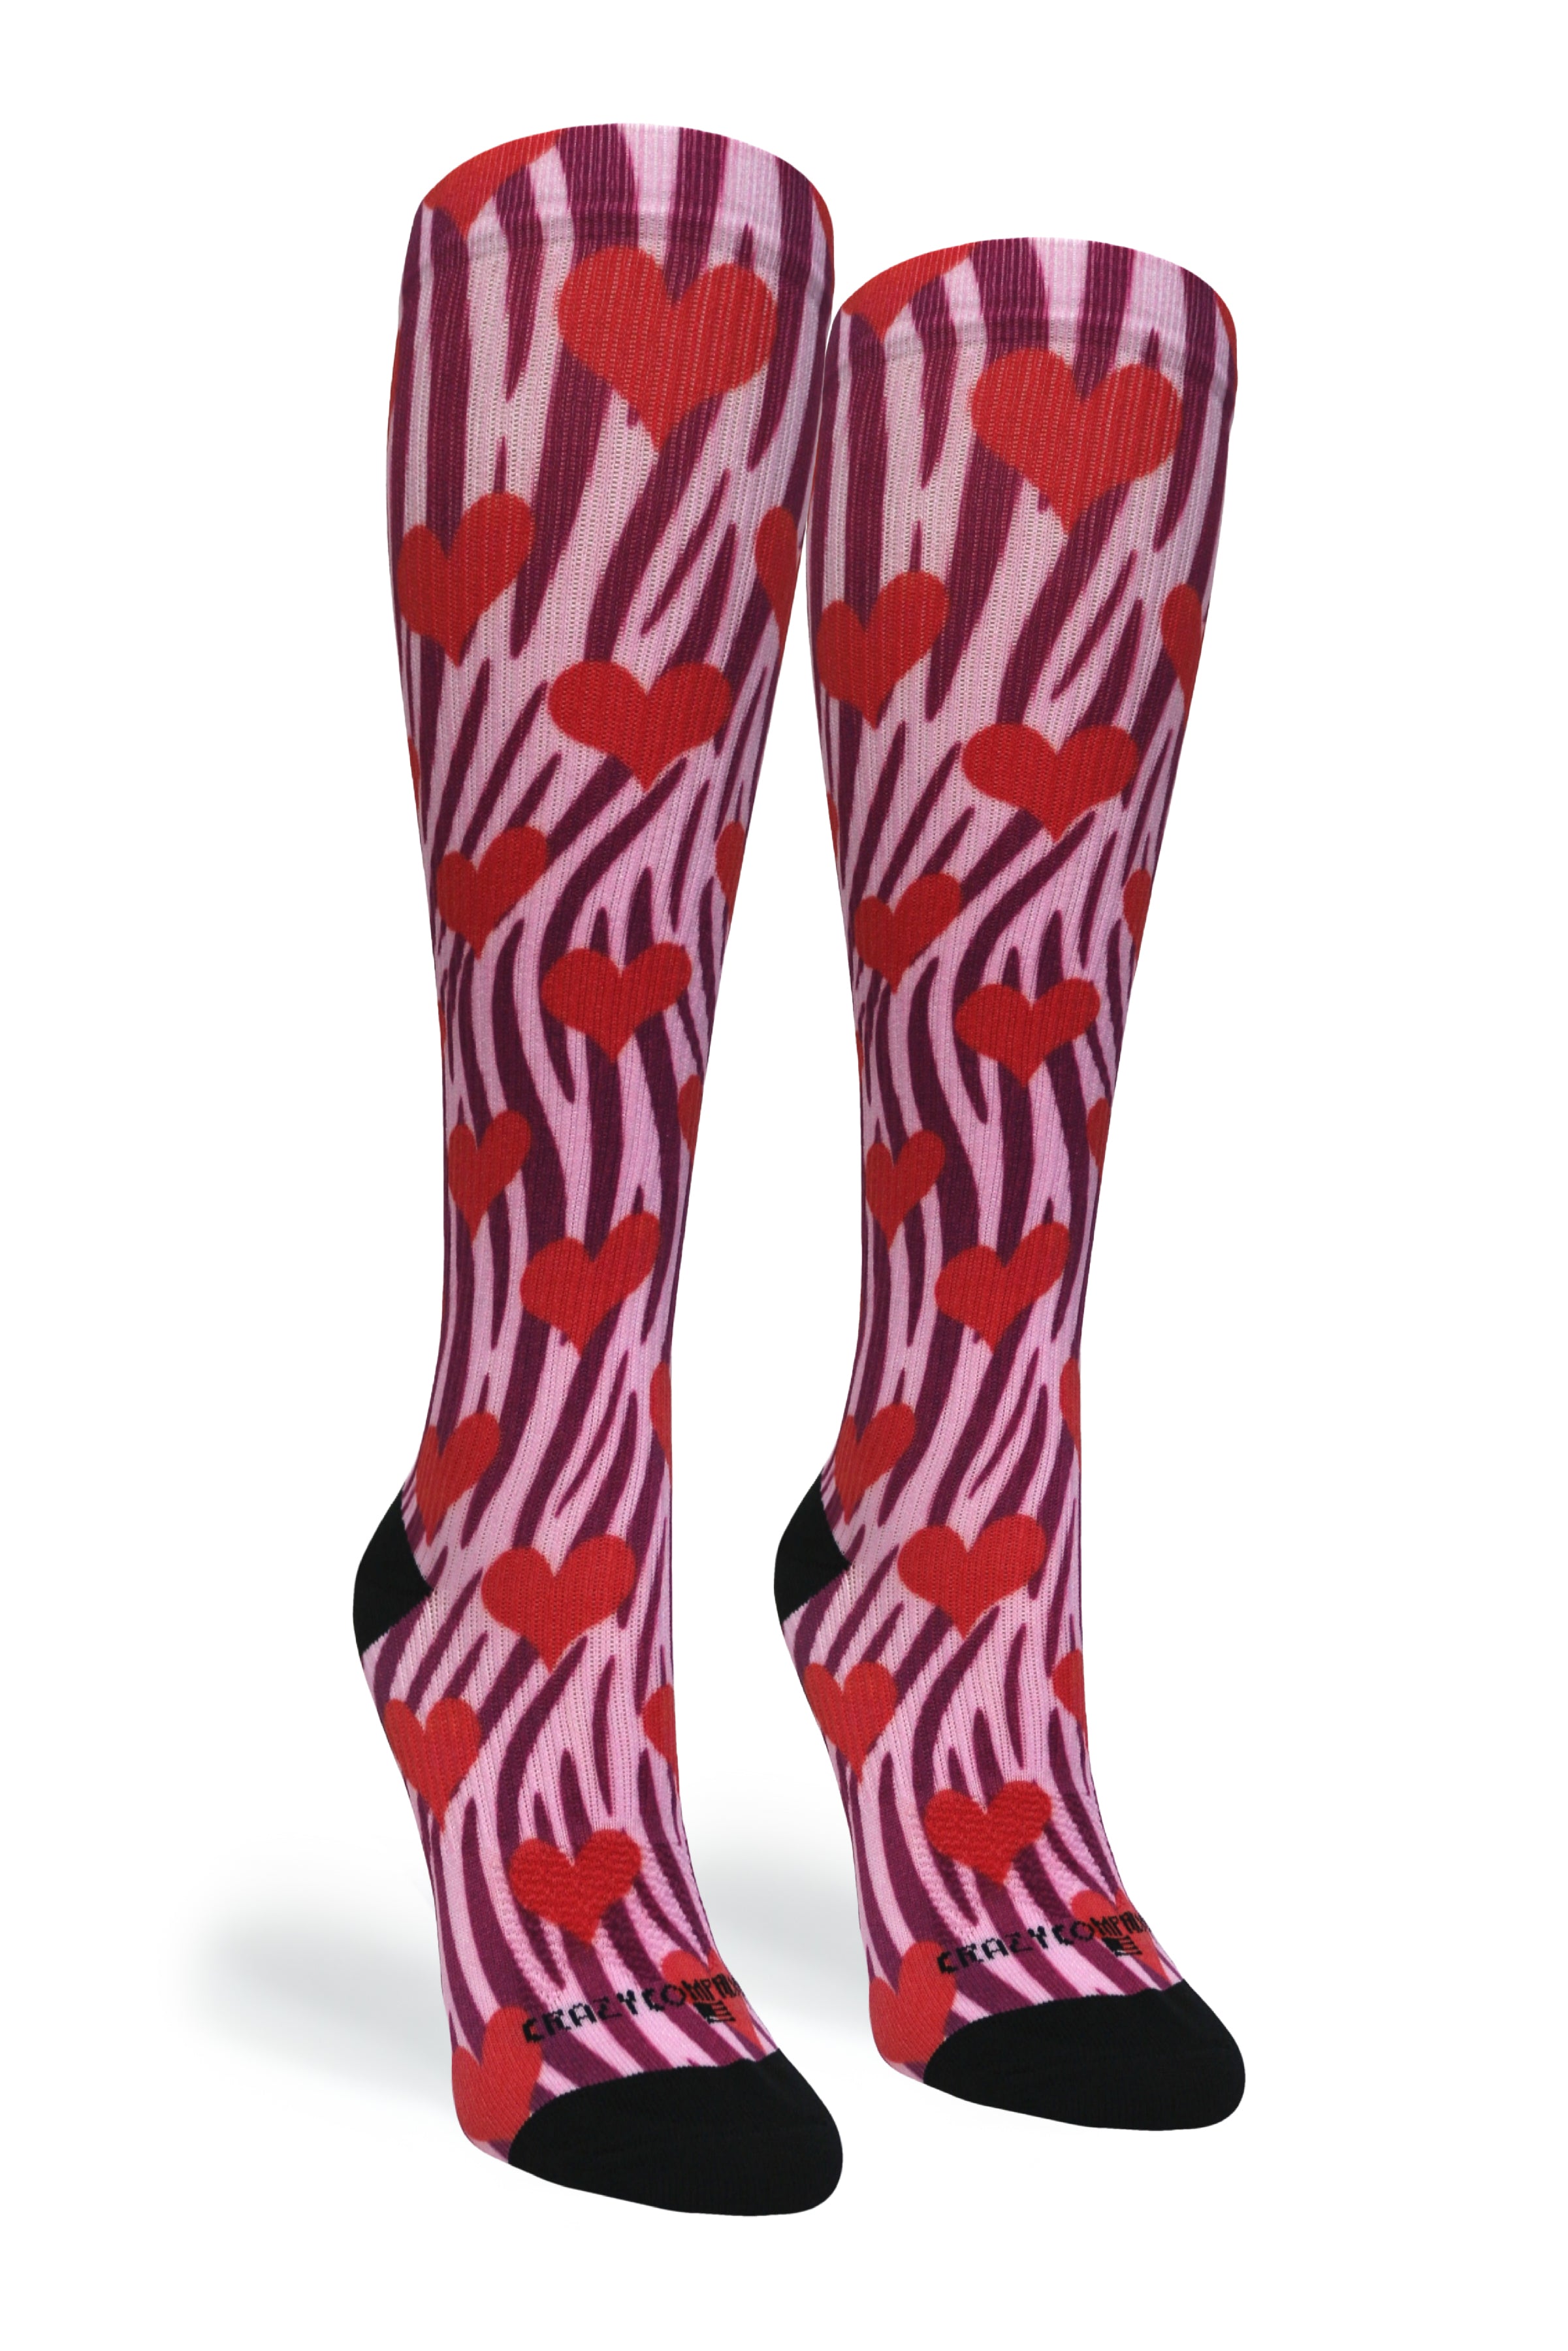 360 Zebra Hearts OTC Compression Socks (Standard & Extra Wide)